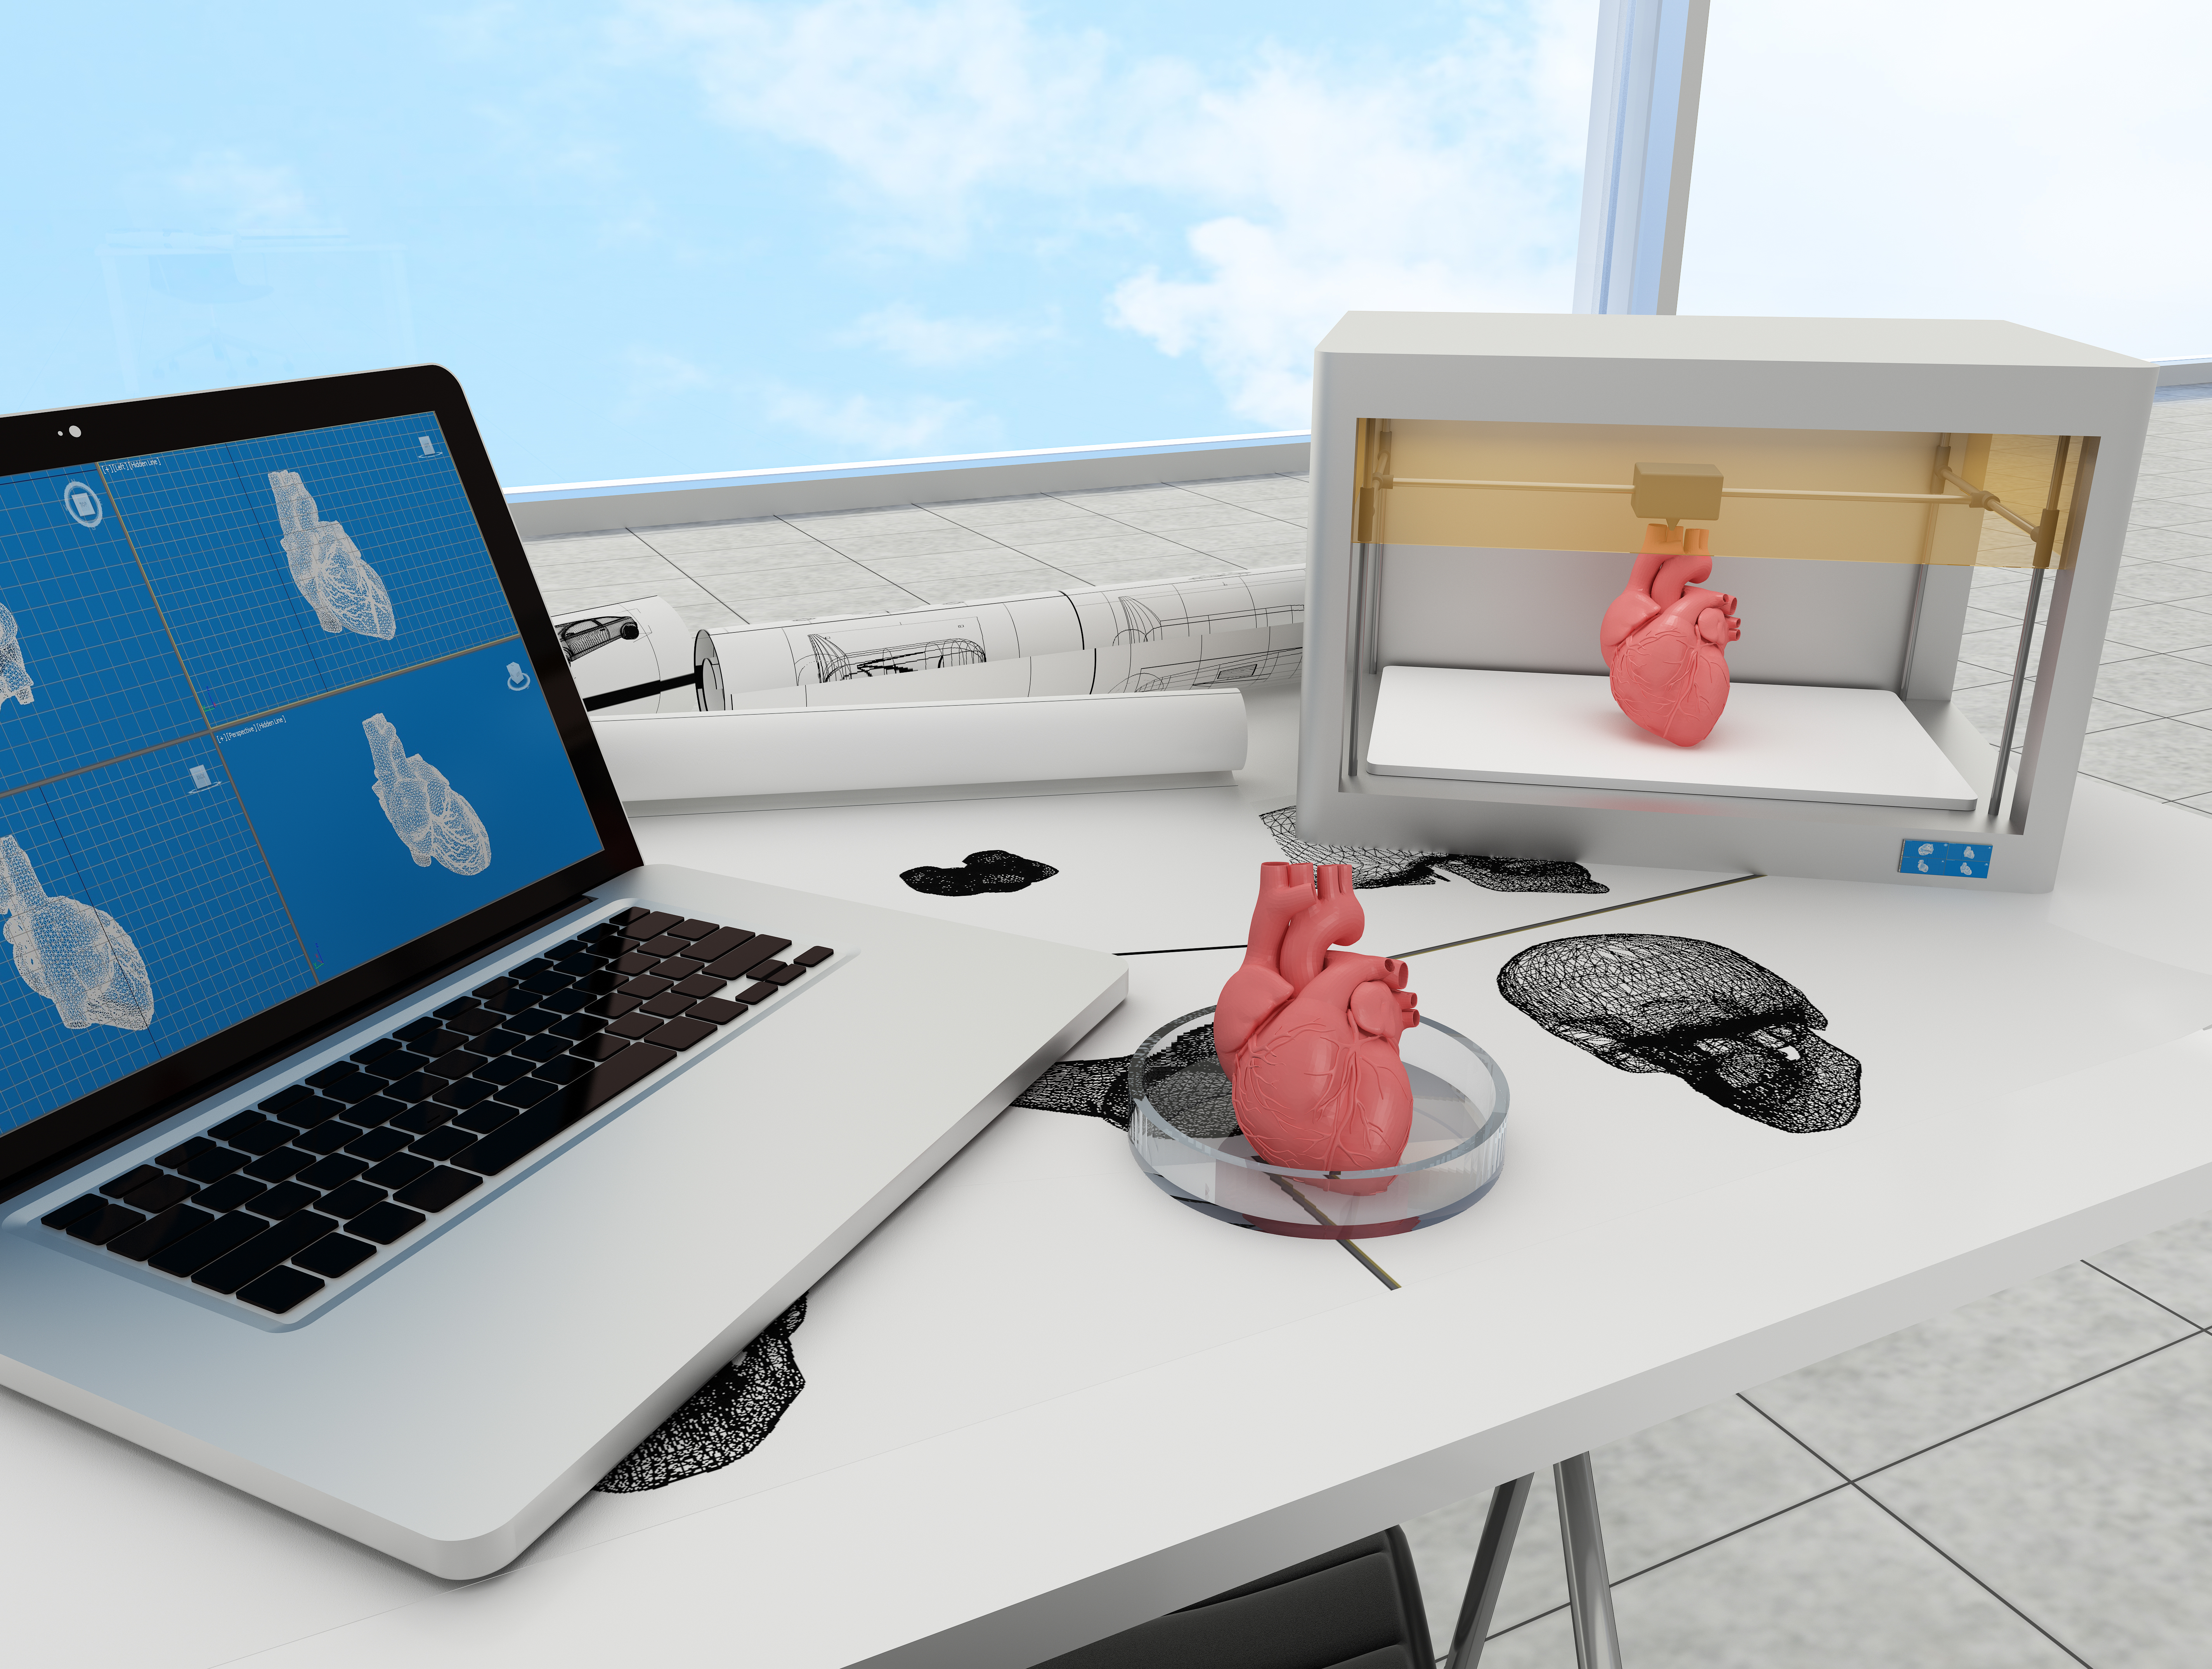 3D Printing Revolutionizing Healthcare